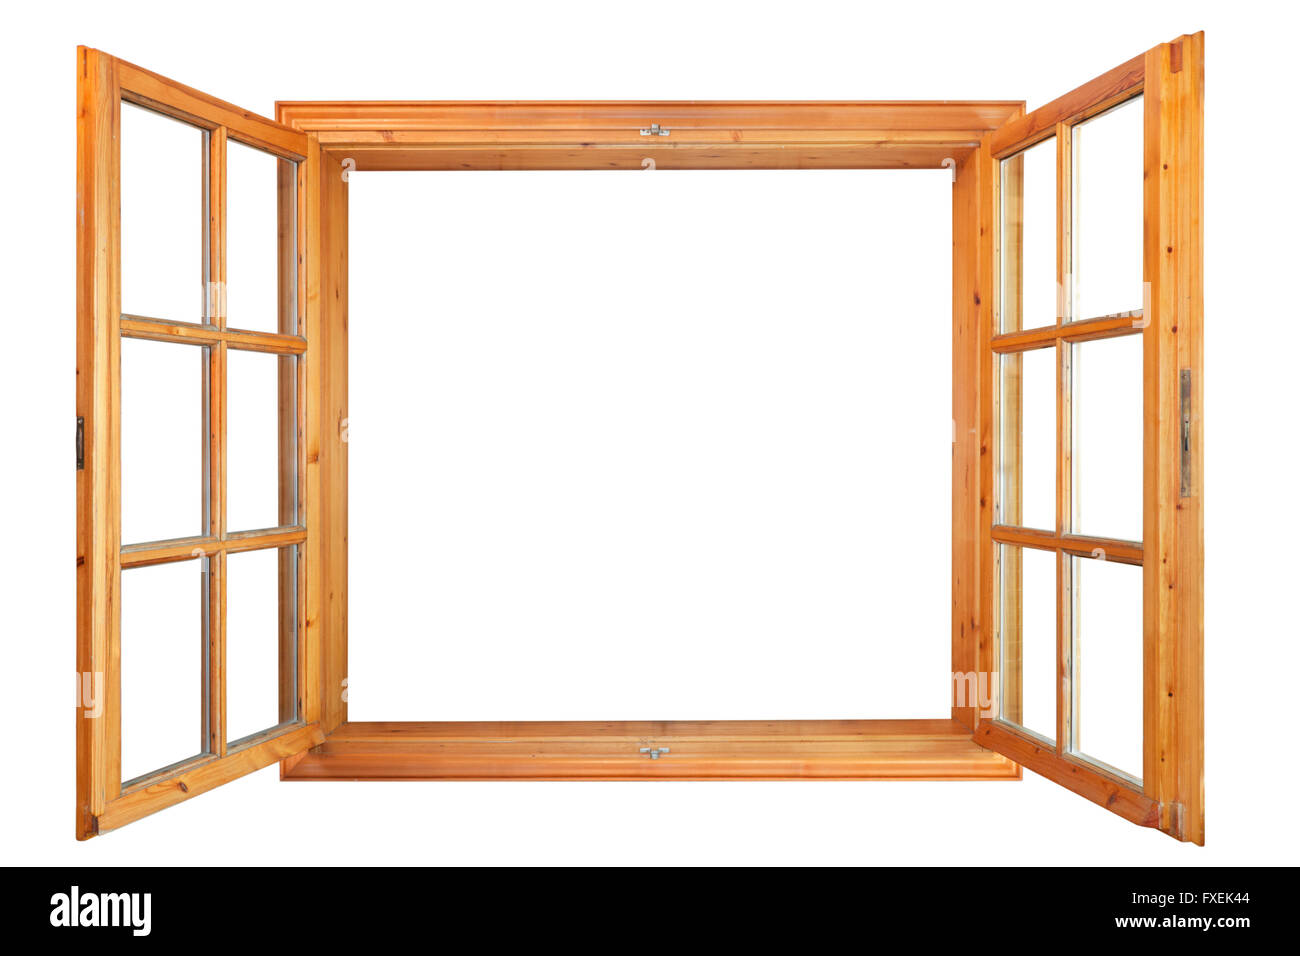 Wooden double window opened isolated on white background Stock Photo